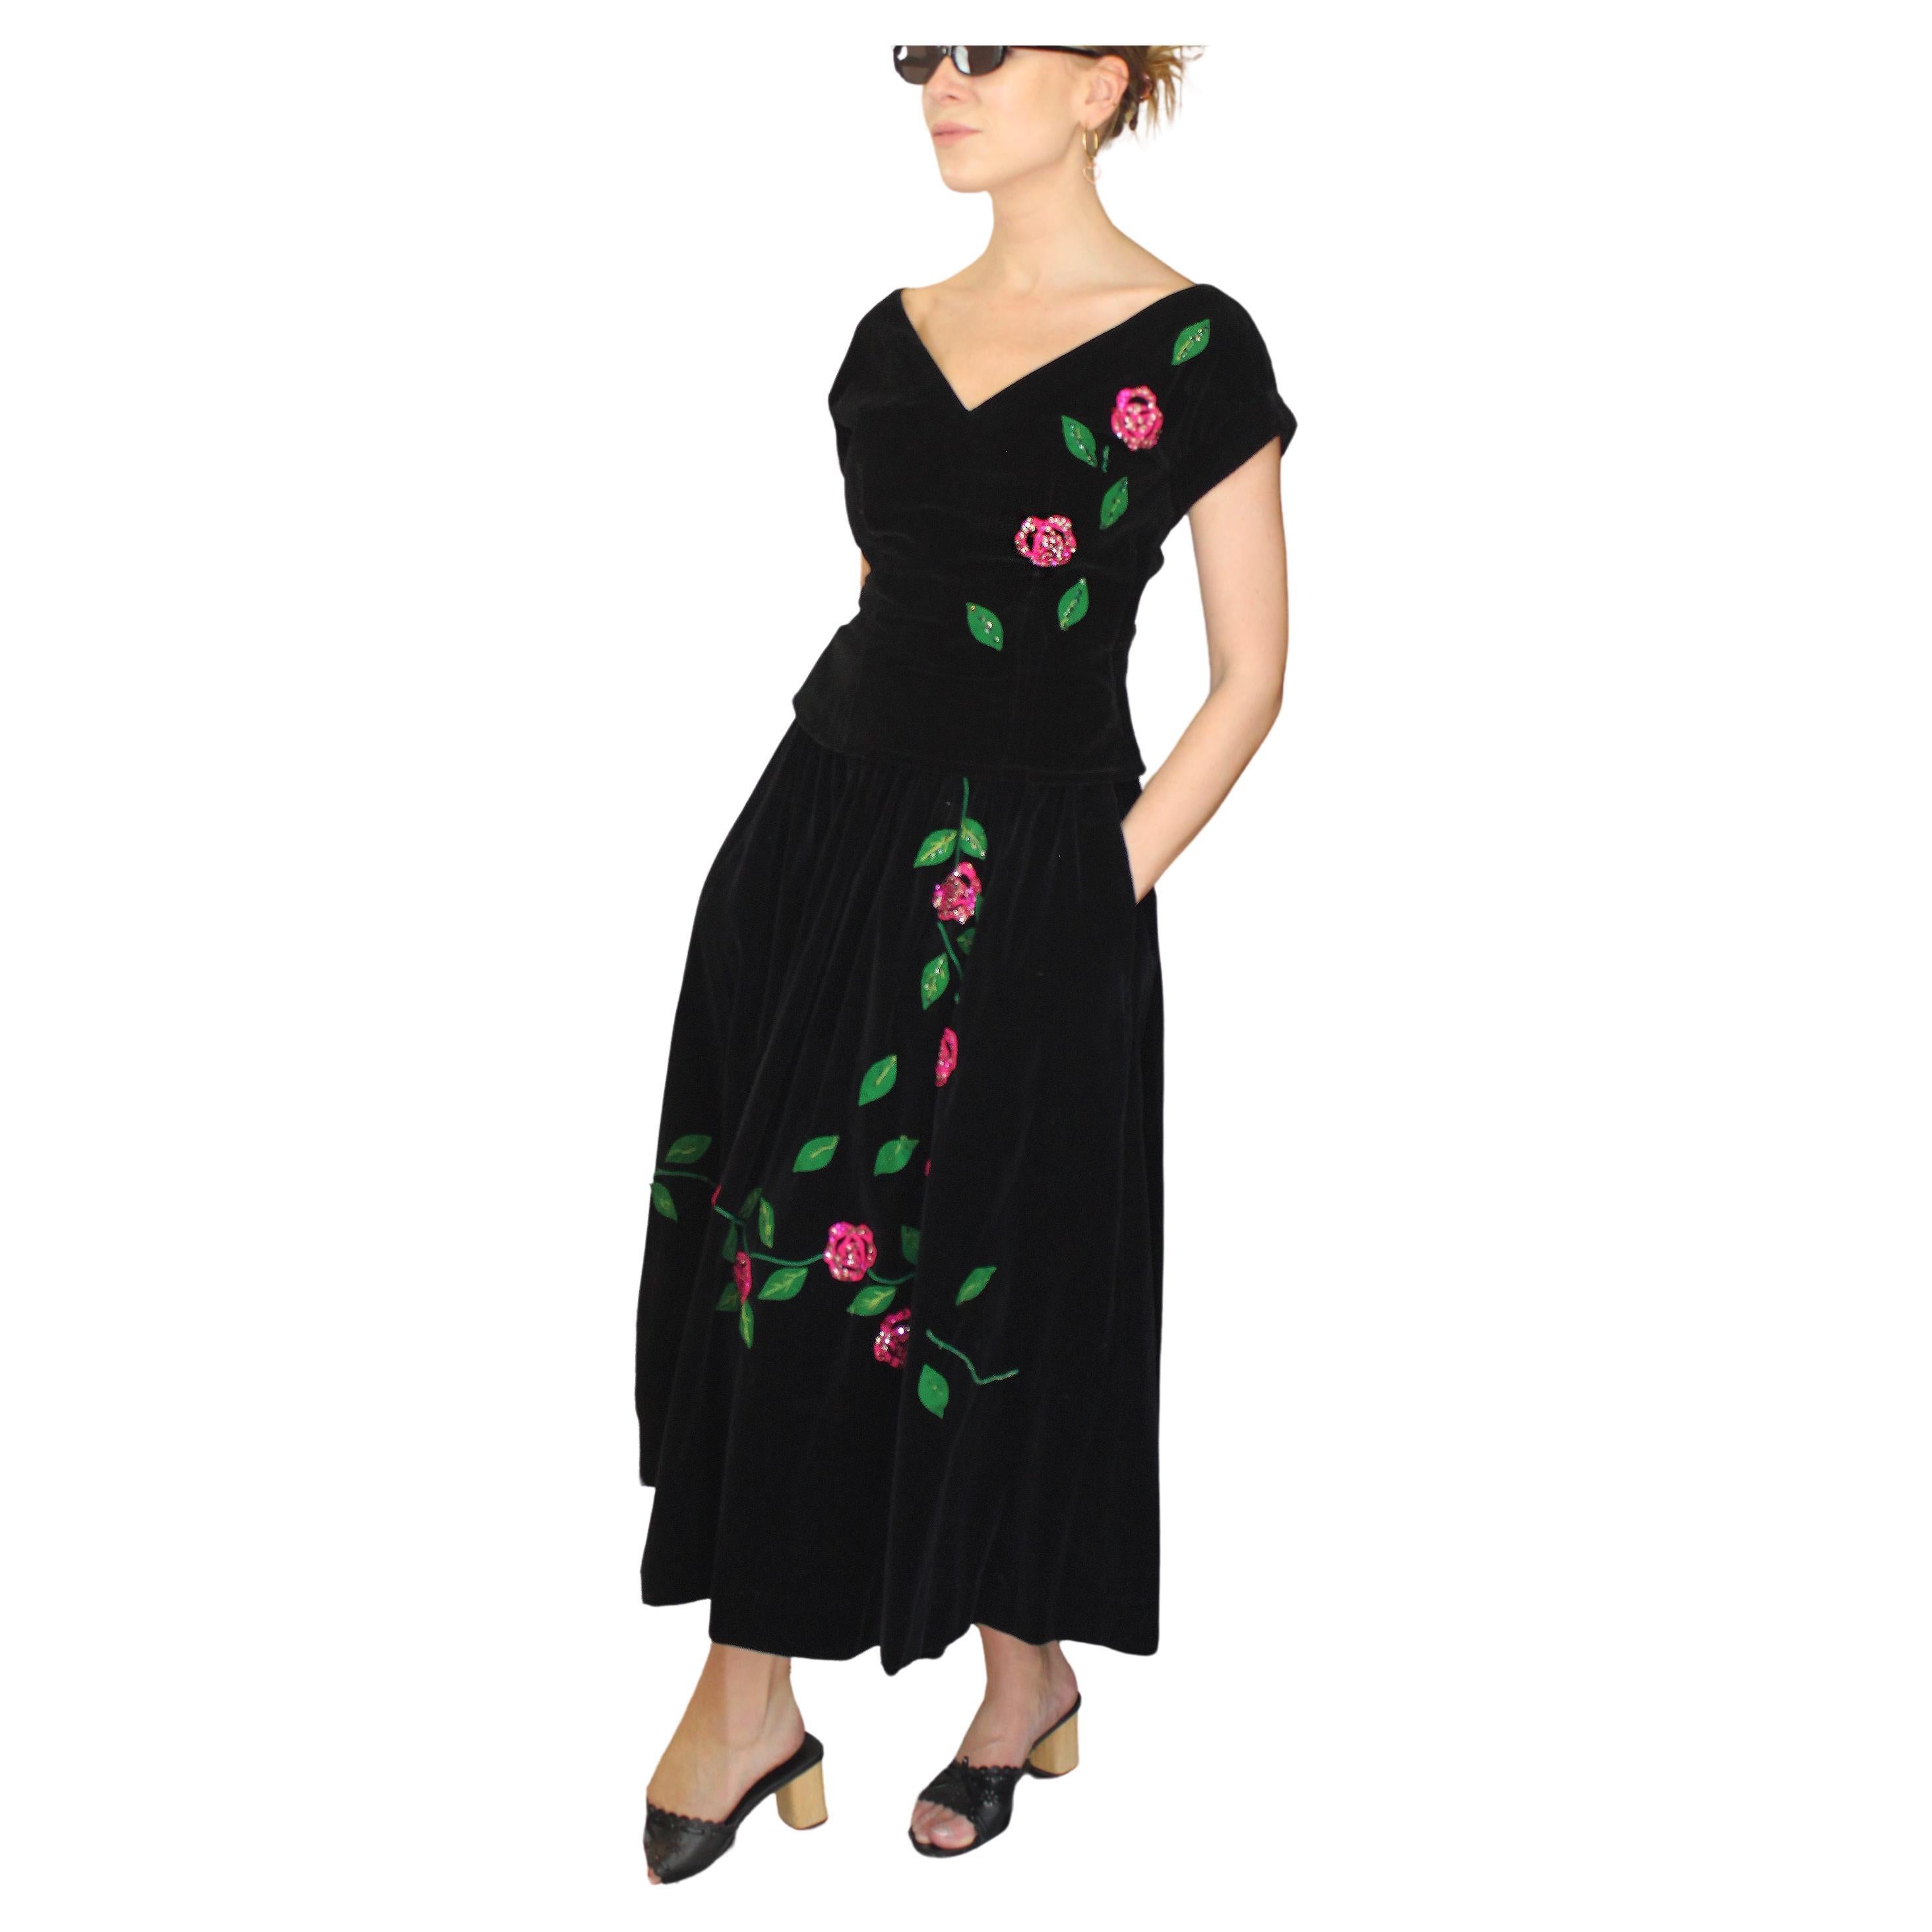 Vintage 1940s Velvet Two-Piece Dress with Rose Appliqué For Sale